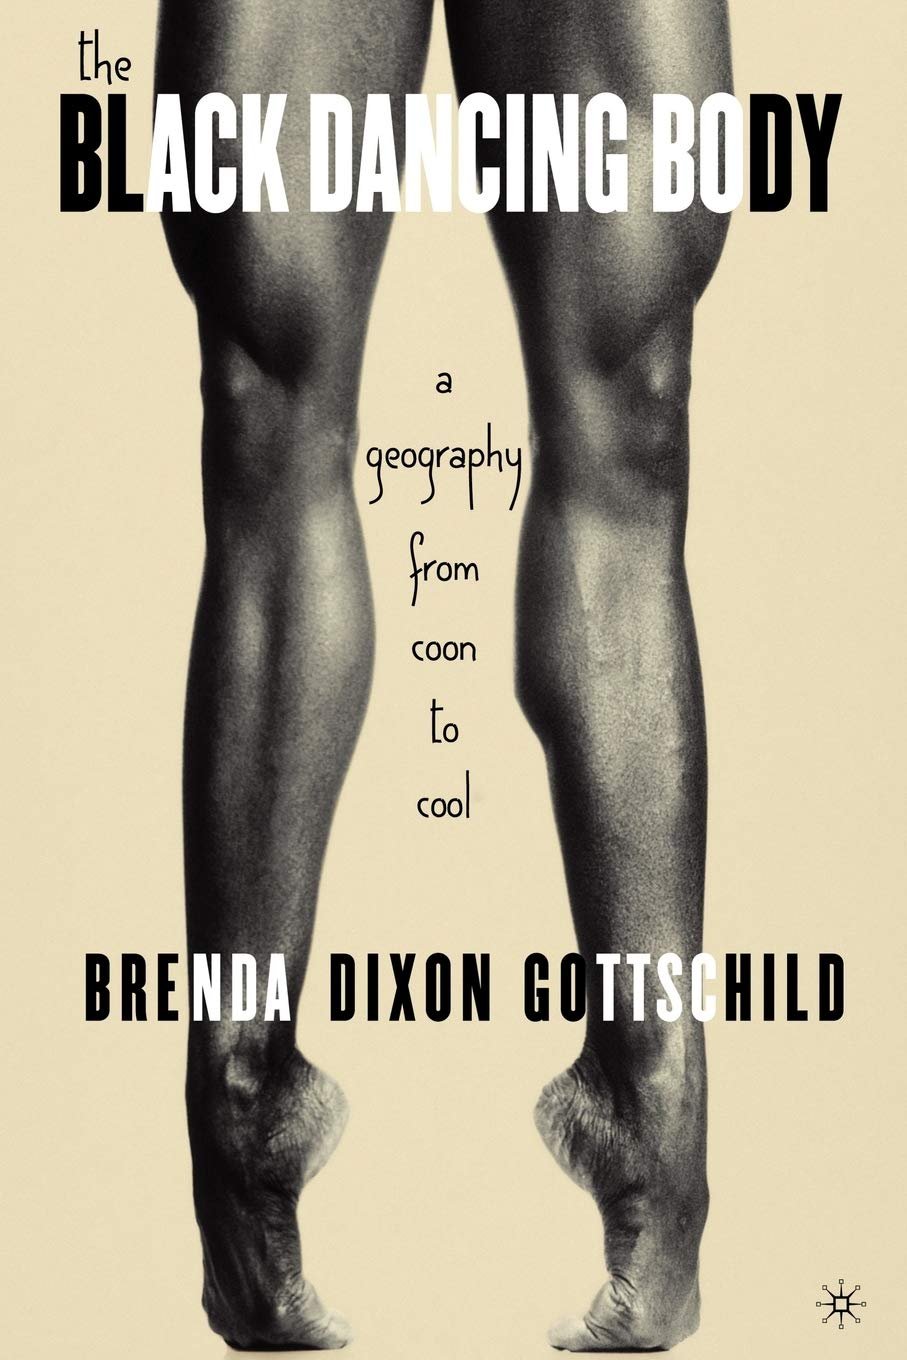 THE BLACK DANCING BODY by Brenda Dixon Gottschild